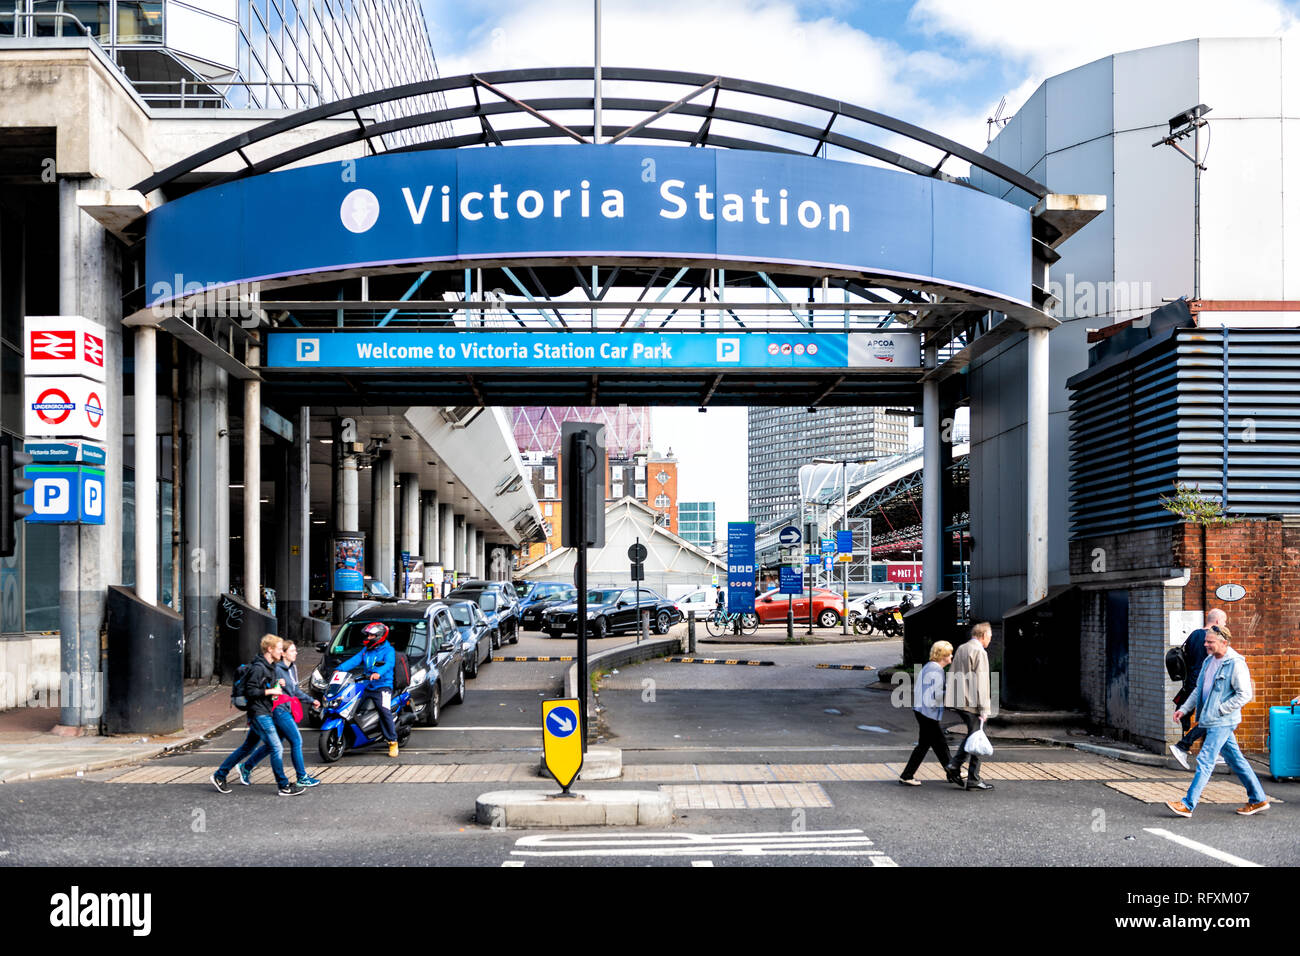 London, UK - September 15, 2018: Blue sign for Victoria Station Car Park parking entrance and people pedestrians walking on pavement Stock Photo